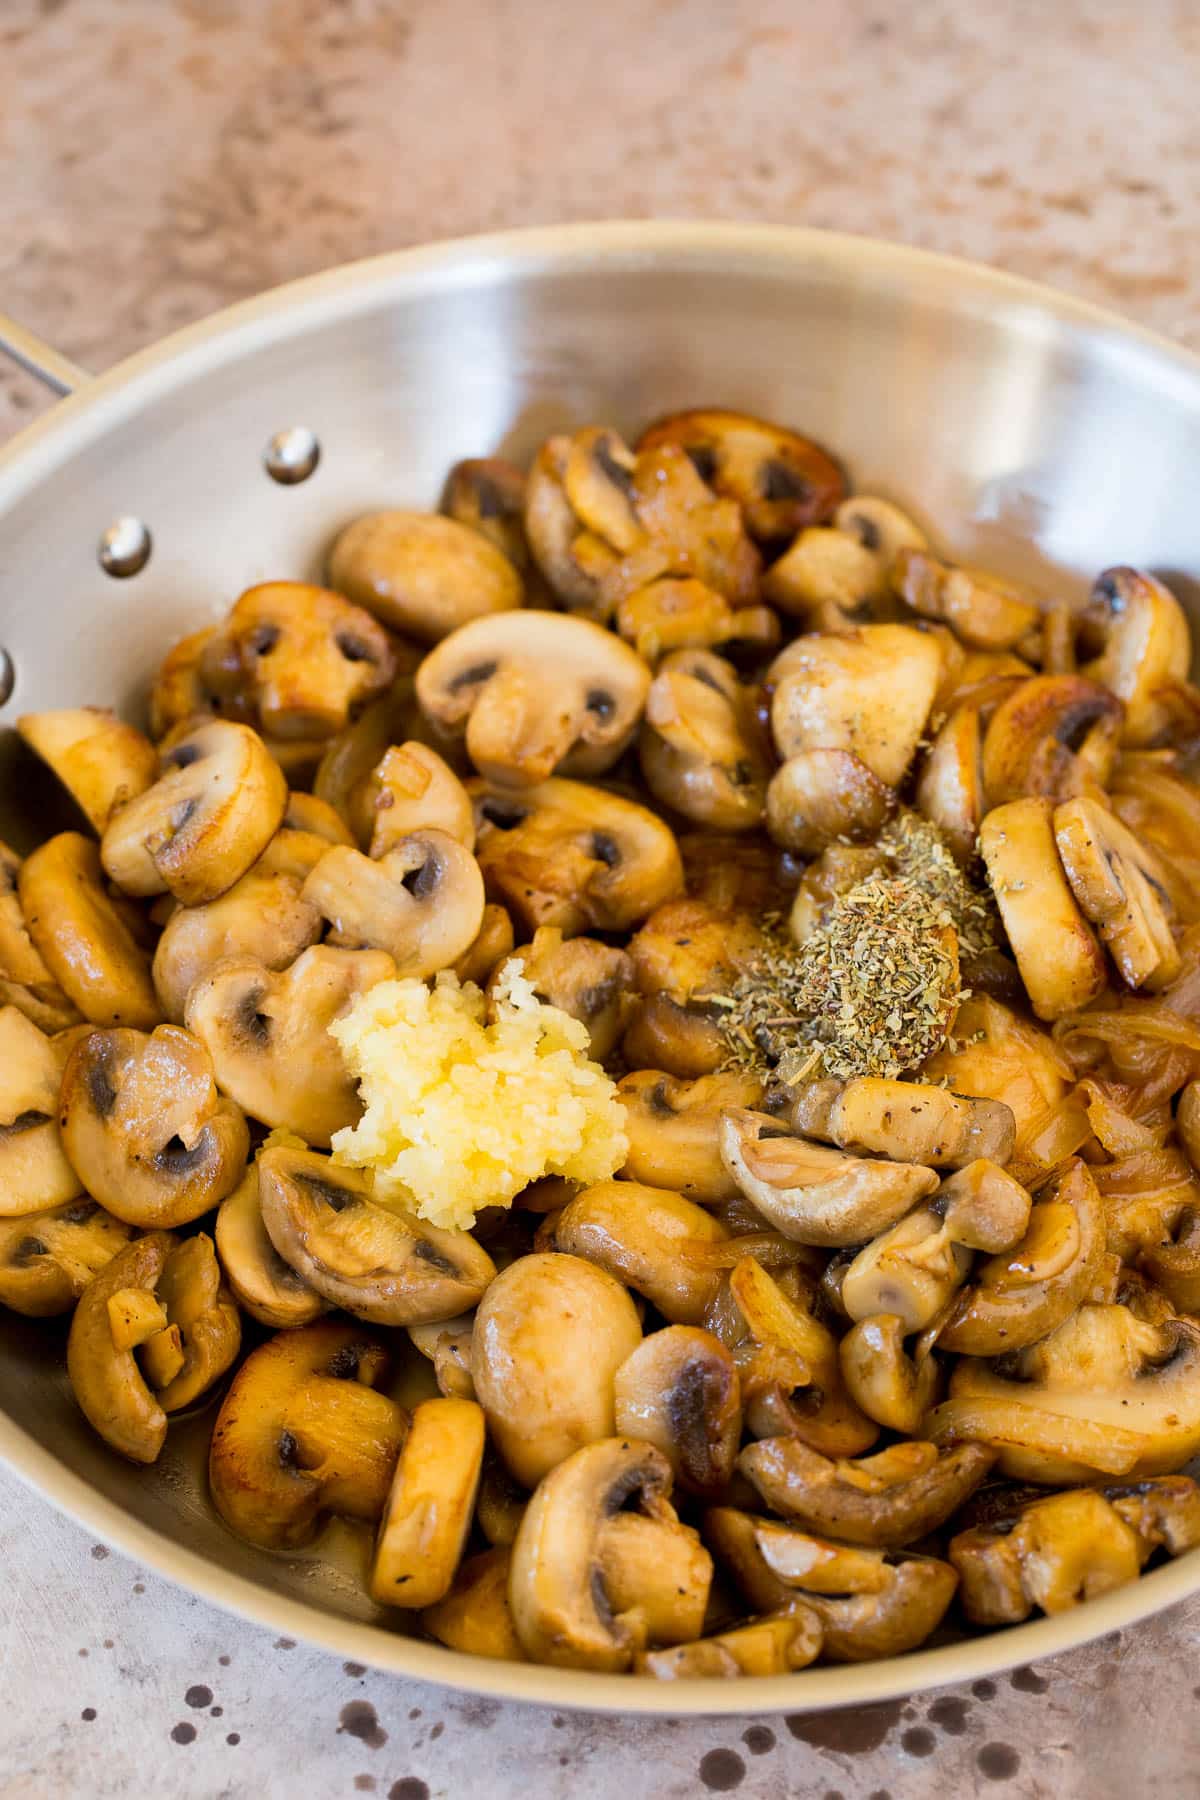 Mushrooms seasoned with garlic, salt and pepper.